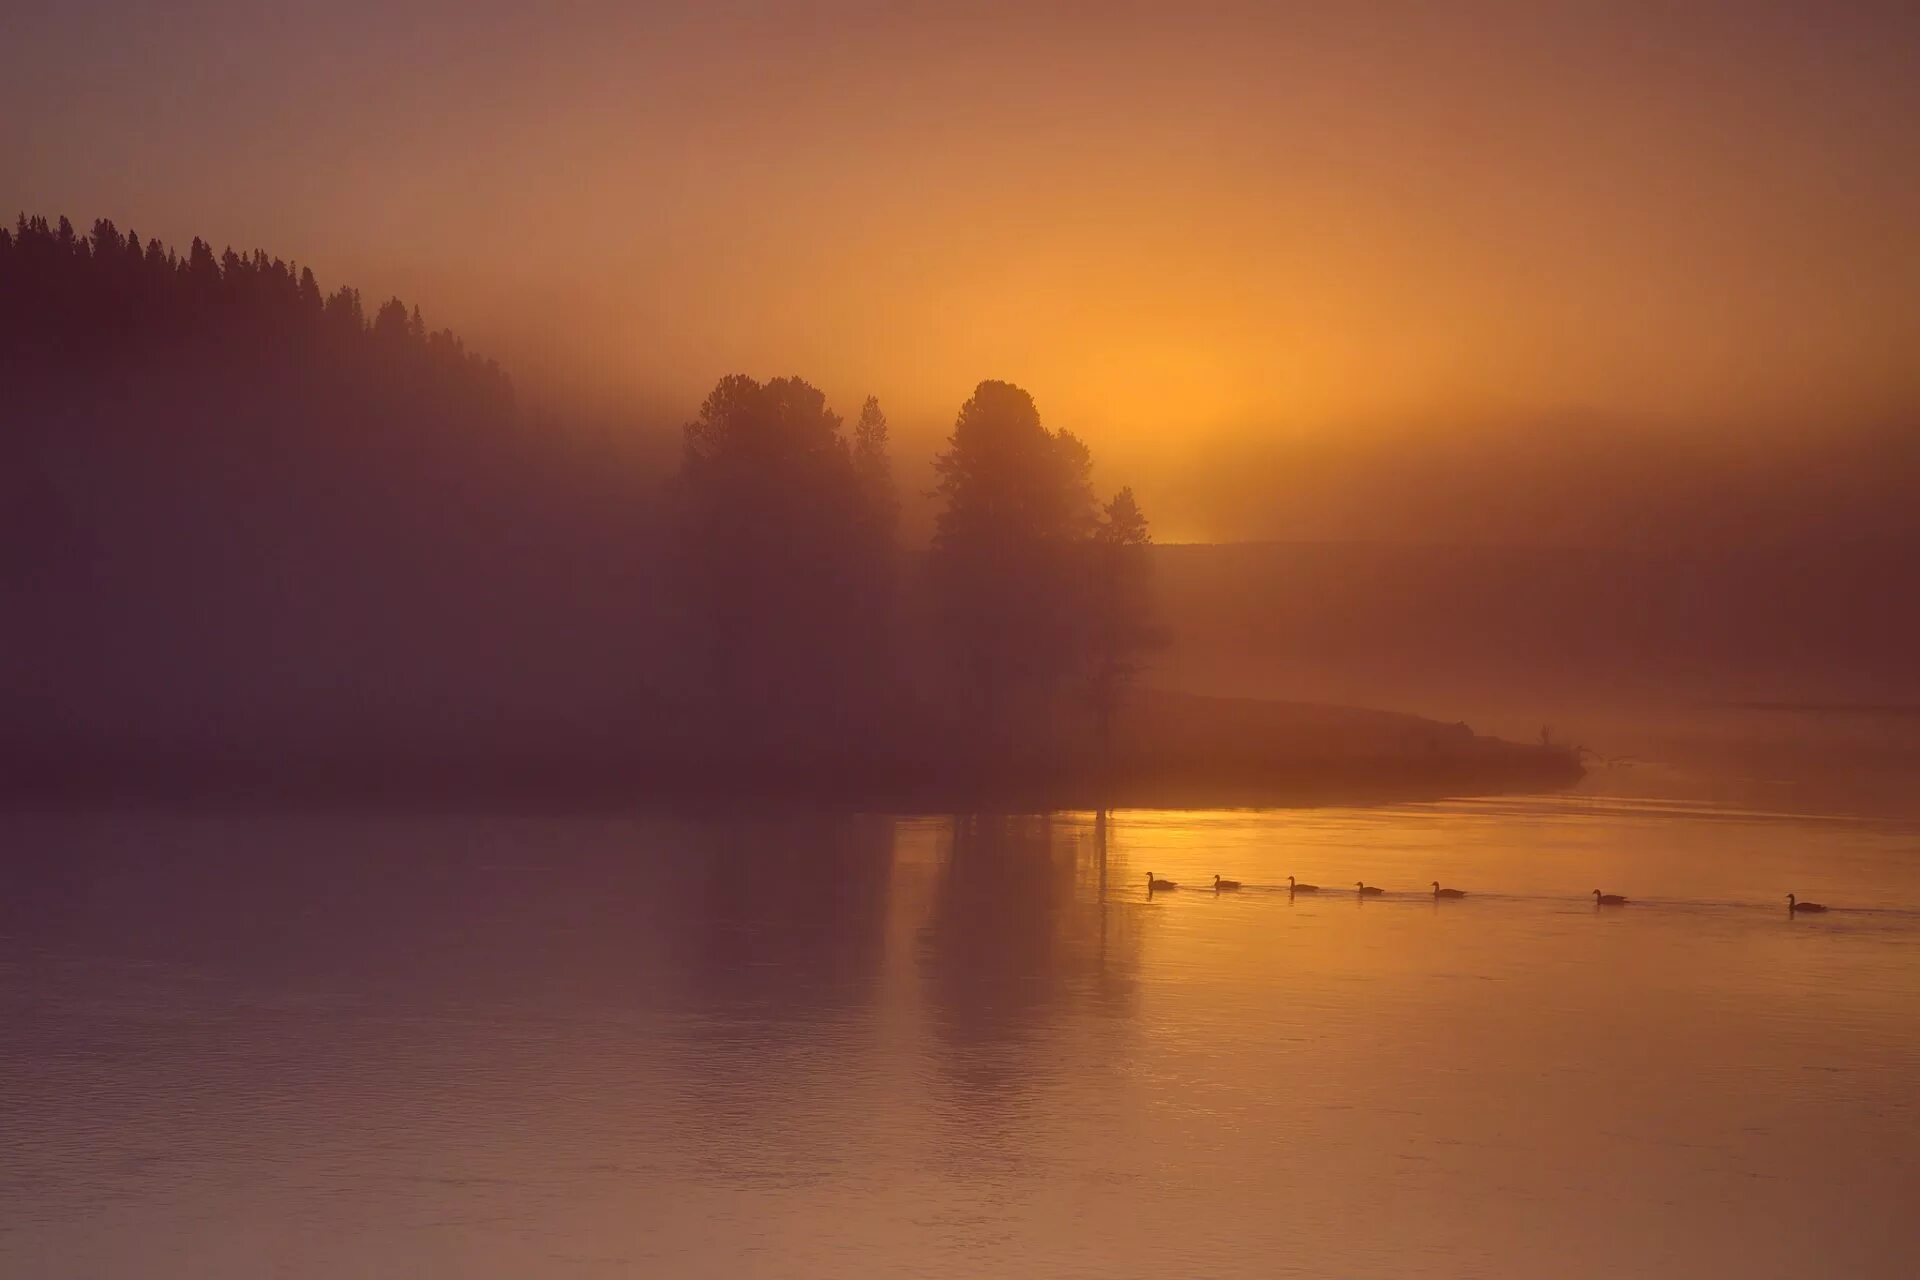 Штиль туман. Закат в тумане. Туманный рассвет на озере. Дымка над озером. Туманное озеро.